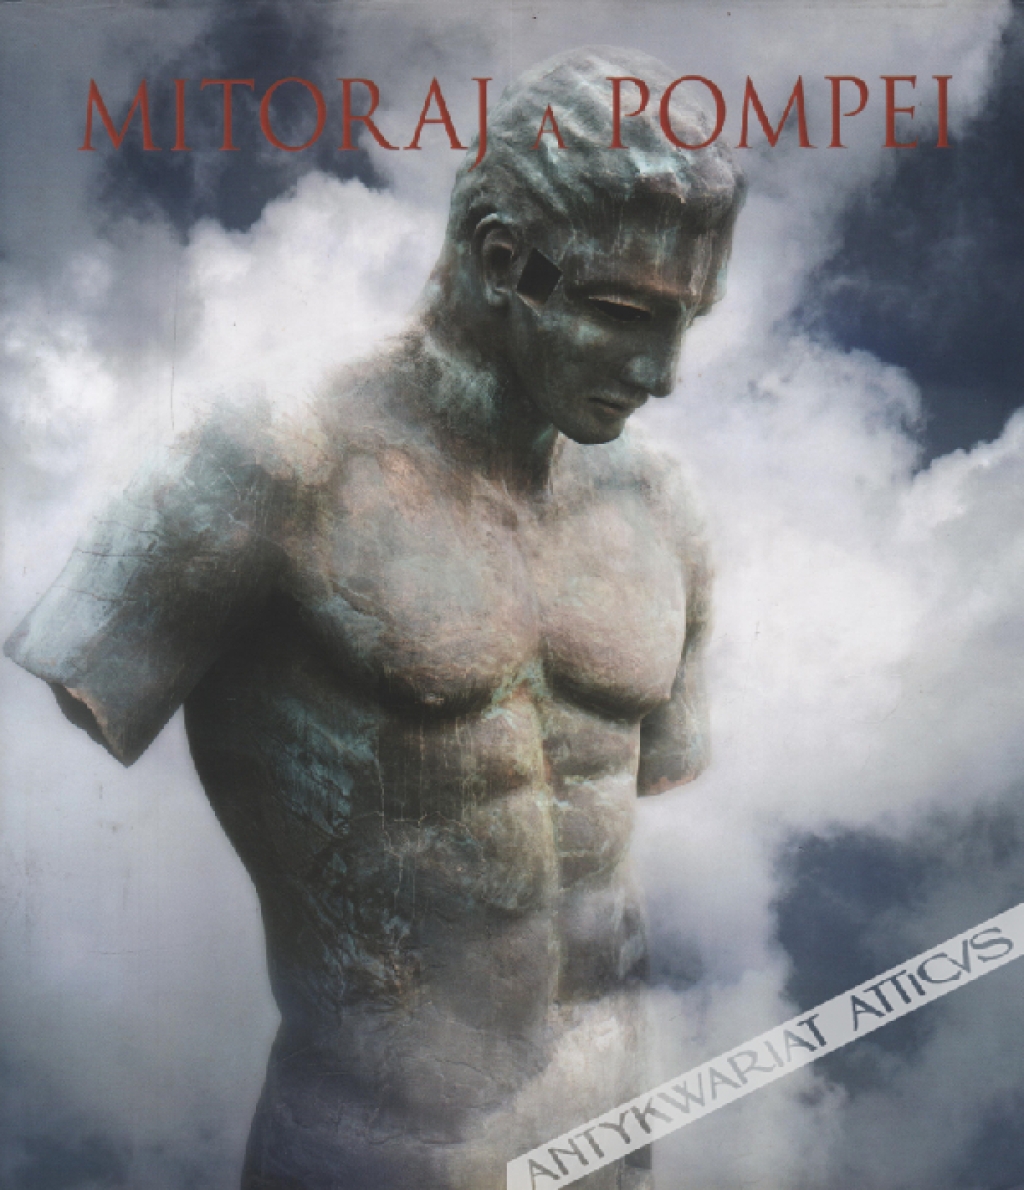 Mitoraj a Pompei. Scavi archeologici di pompei 15 maggio 2016 - 8 gennaio 2017 Mitoraj in Pompeii. Archeological Site of Pompeii 15th May 2016 - 8th January 2017